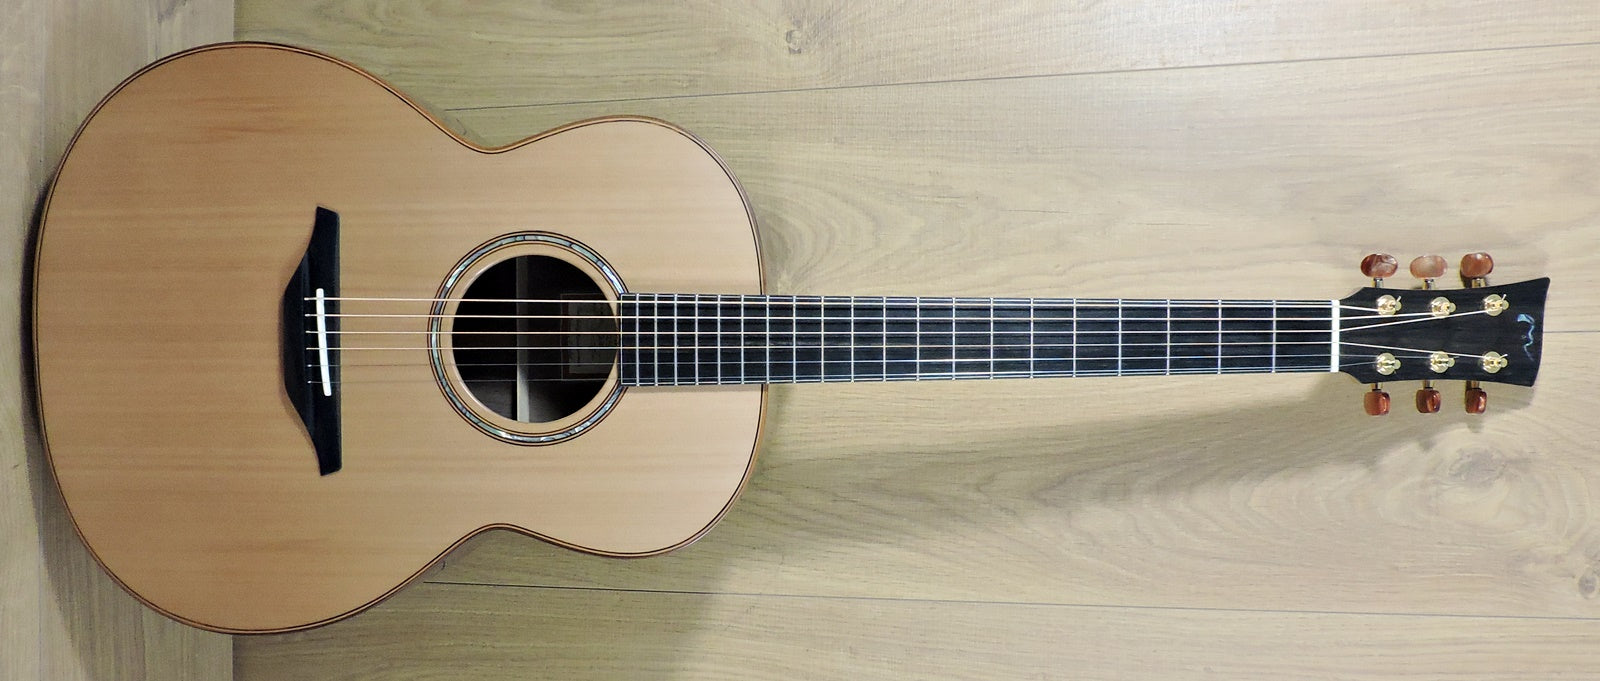 McIlroy A25 Handmade Acoustic Guitar